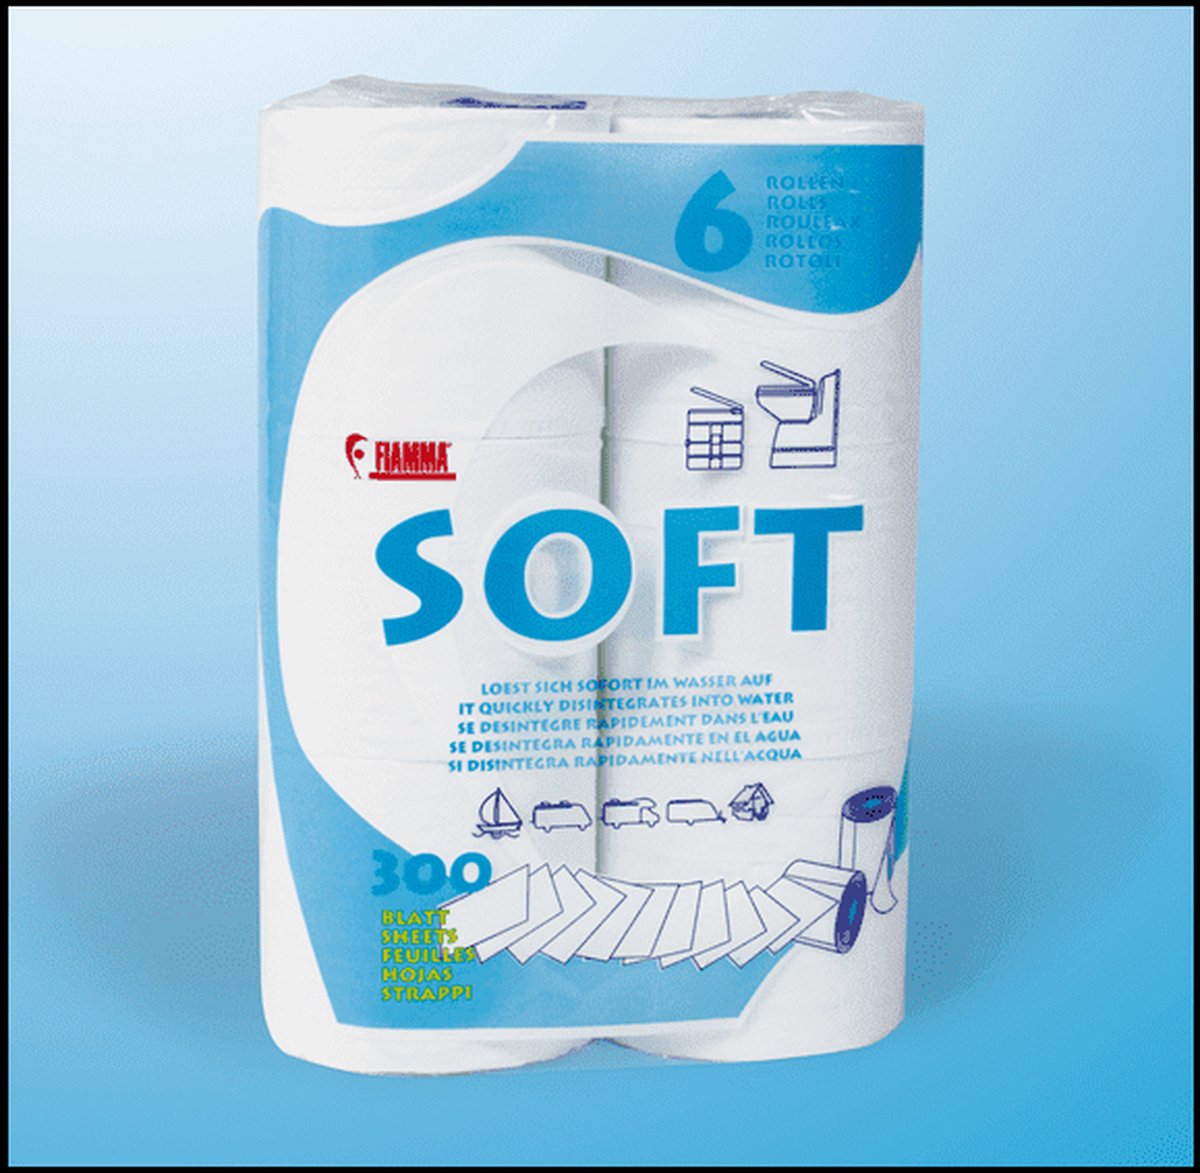 Fiamma Soft toiletpapier snel oplosbaar 6 rollen